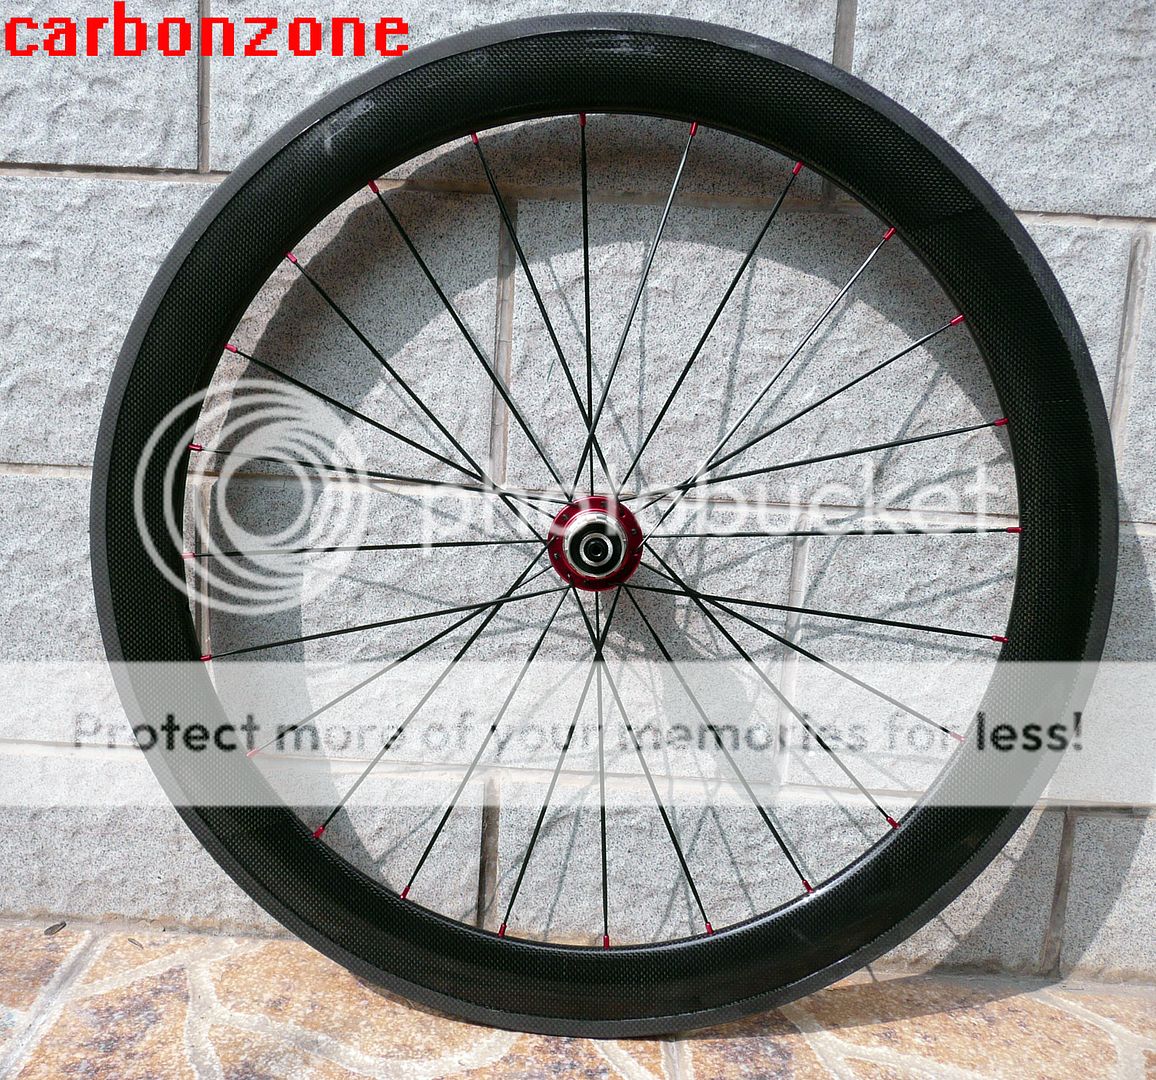 Full carbon wheels 700C& carbon 56mm Tubular wheelsets RED hub/nipples